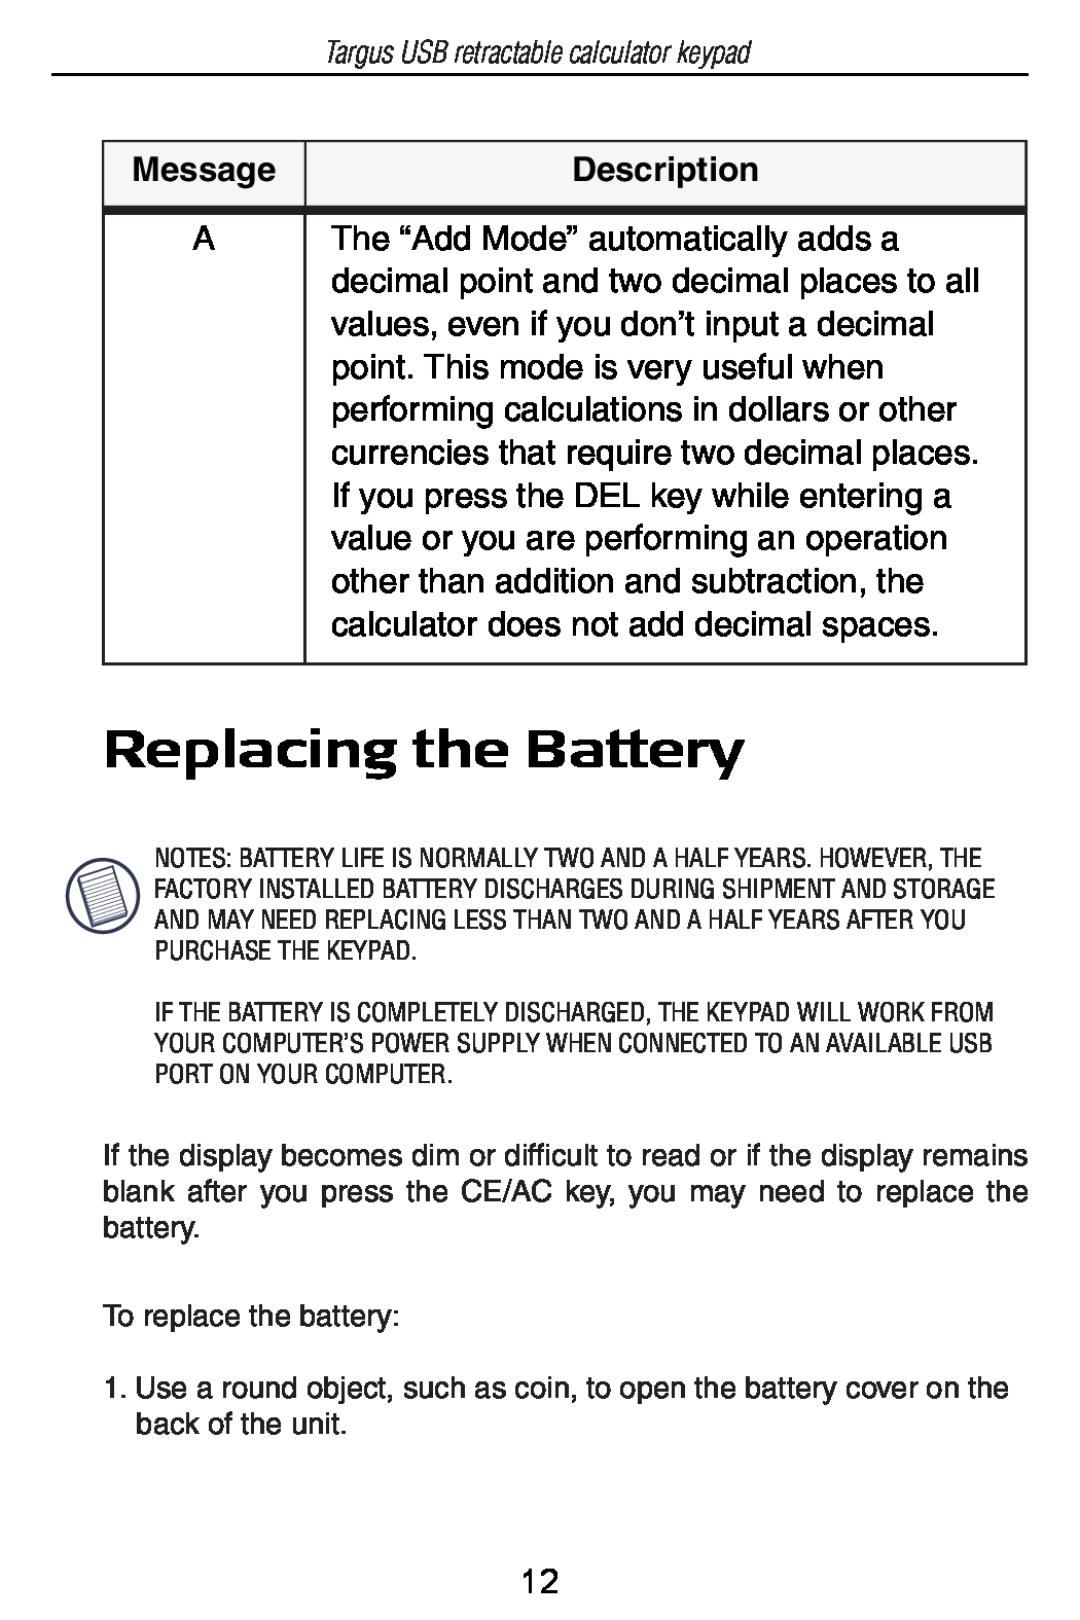 Targus USB Retractable Calculator Keypad specifications Replacing the Battery, Description 